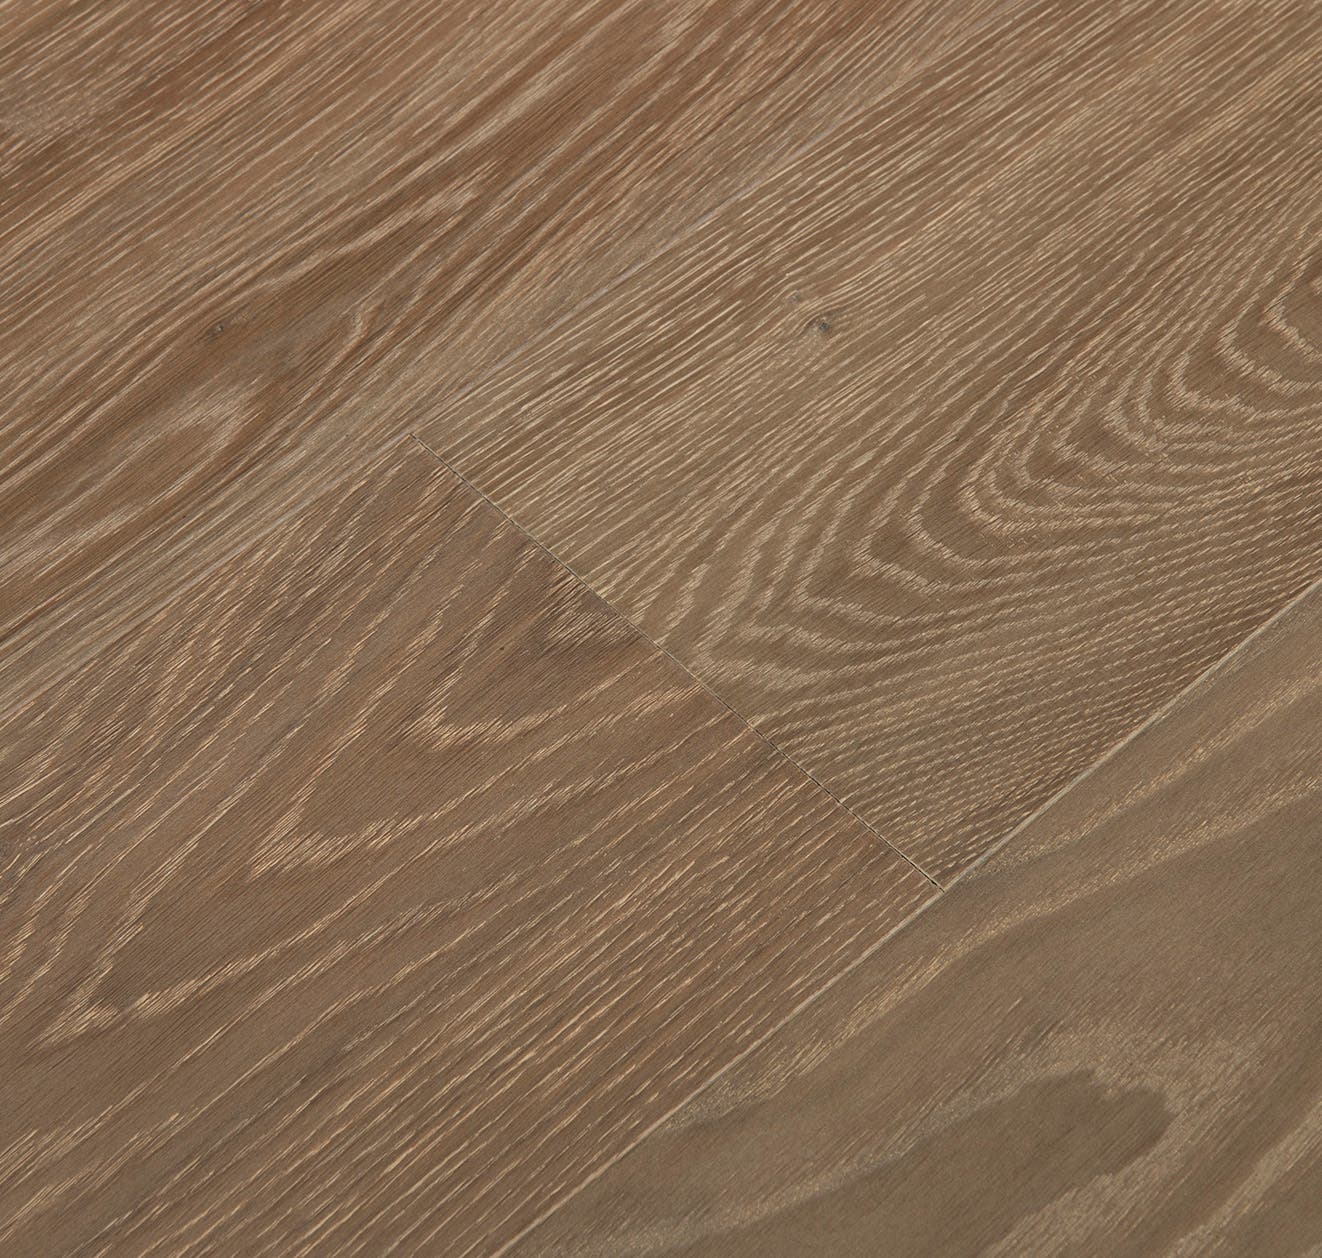 Oak Geowood Plank Flooring Cali Brands Material Bank Search